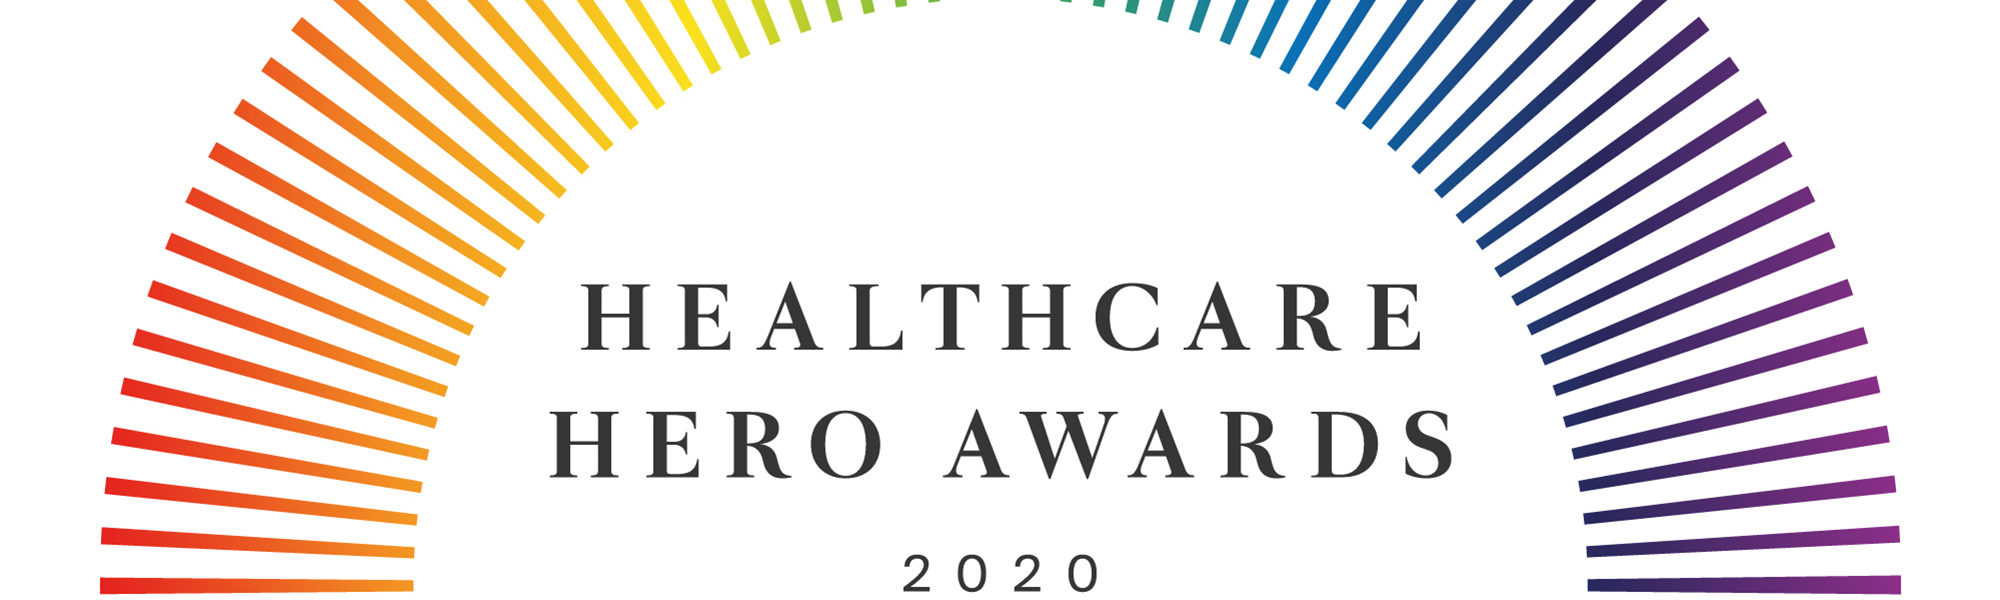 Healthcare Hero Award Banner